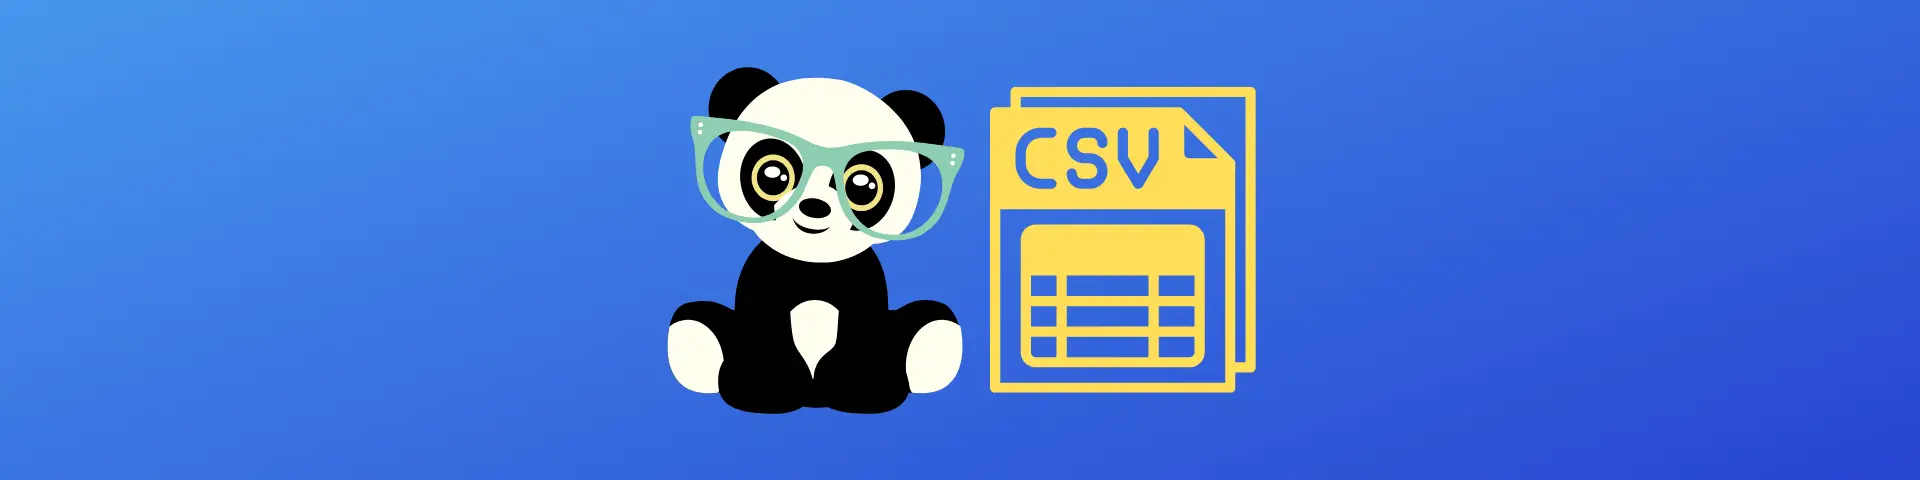 Read CSV file with Pandas